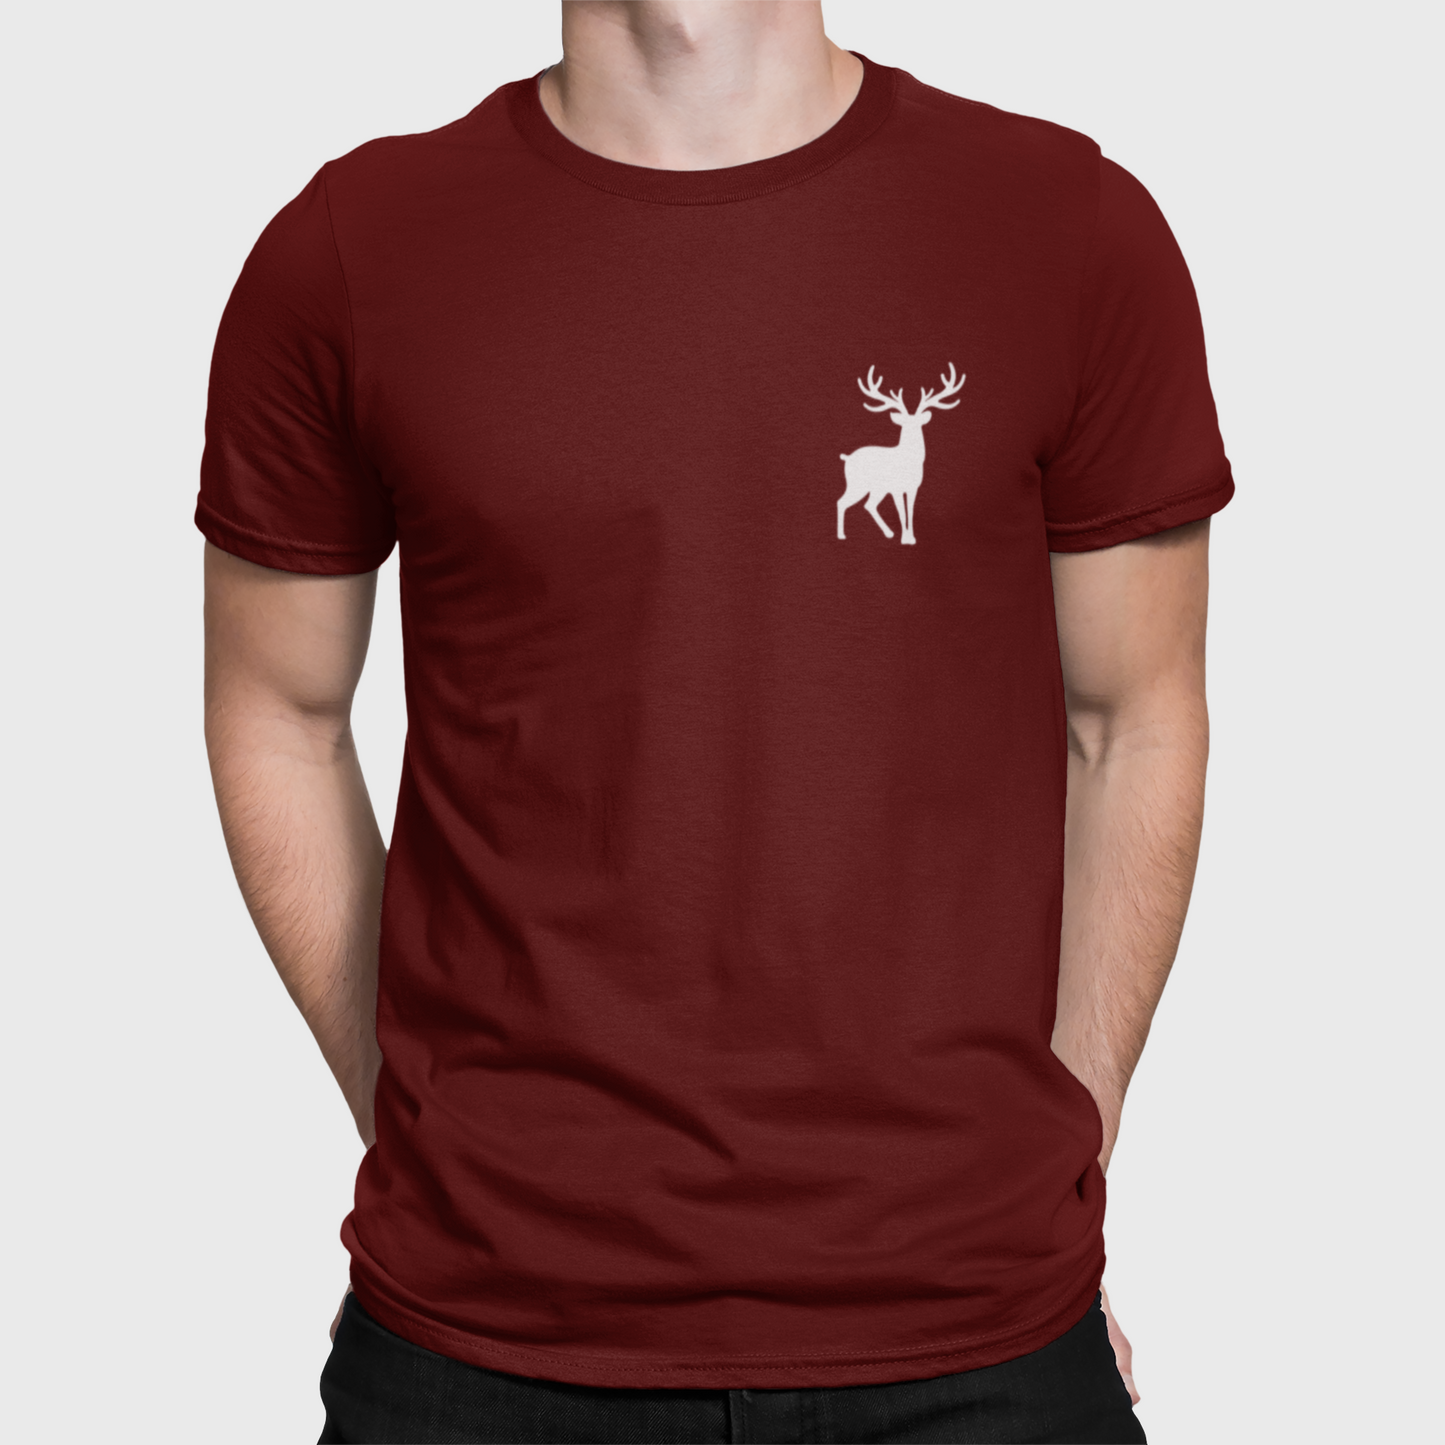 ATOM Basic Maroon Round Neck T-Shirt for Men.